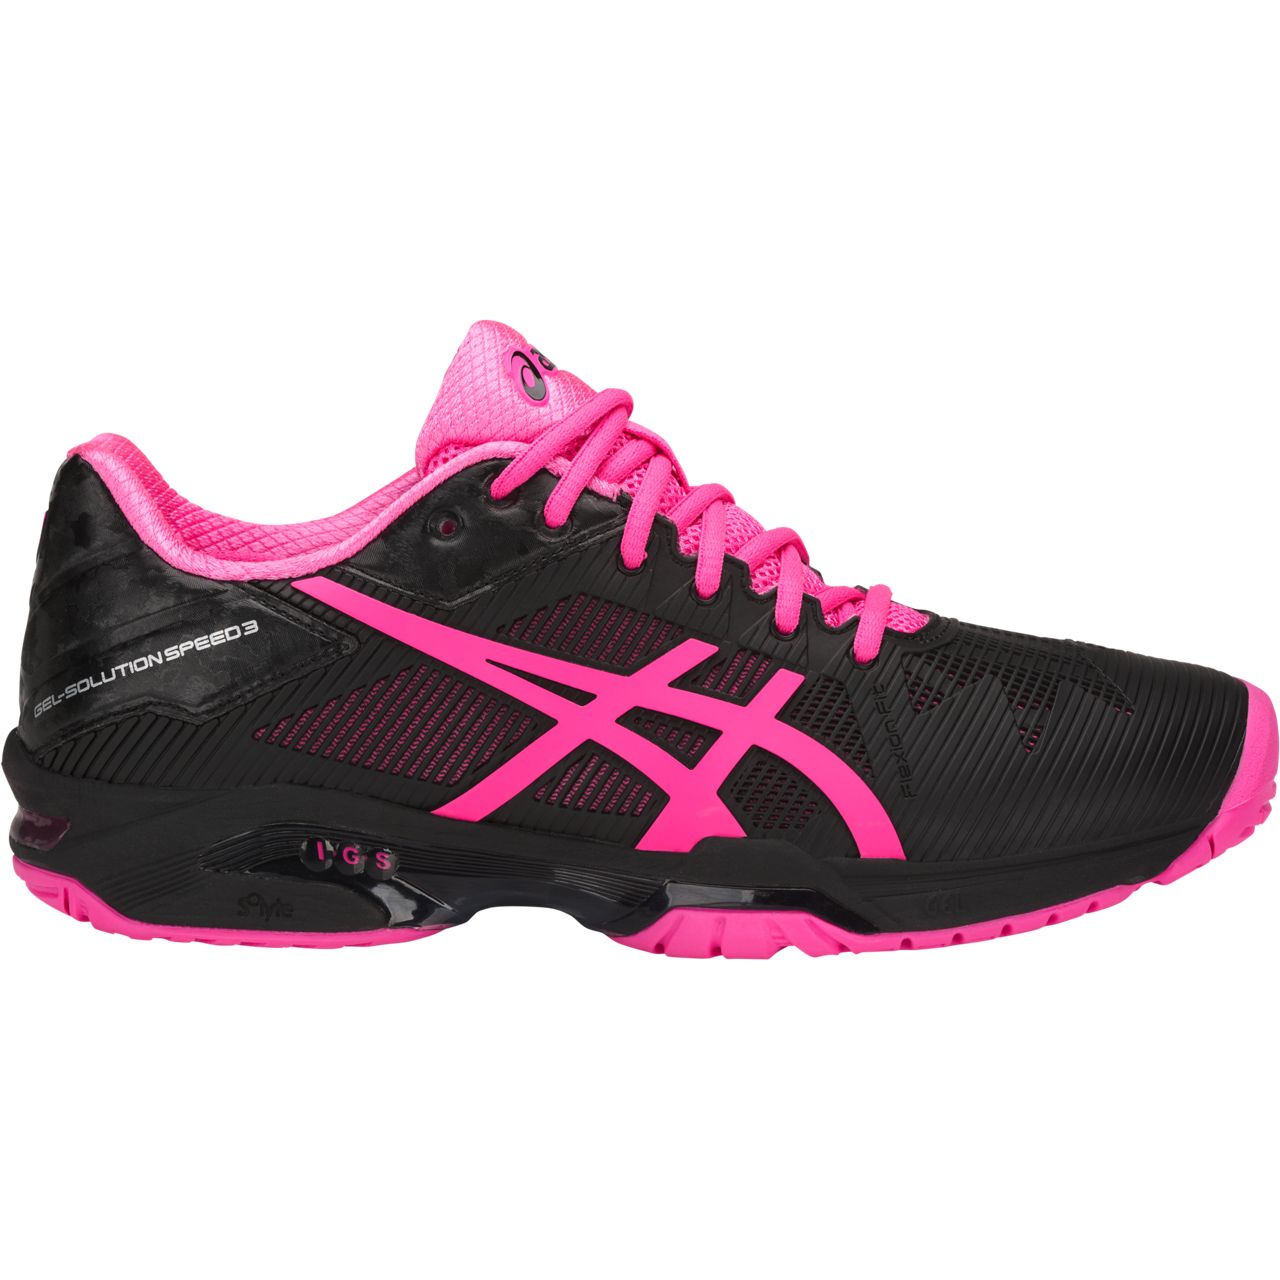 Asics GEL-Solution Speed 3 Women's Tennis Shoe - Black/Pink | PGA Superstore